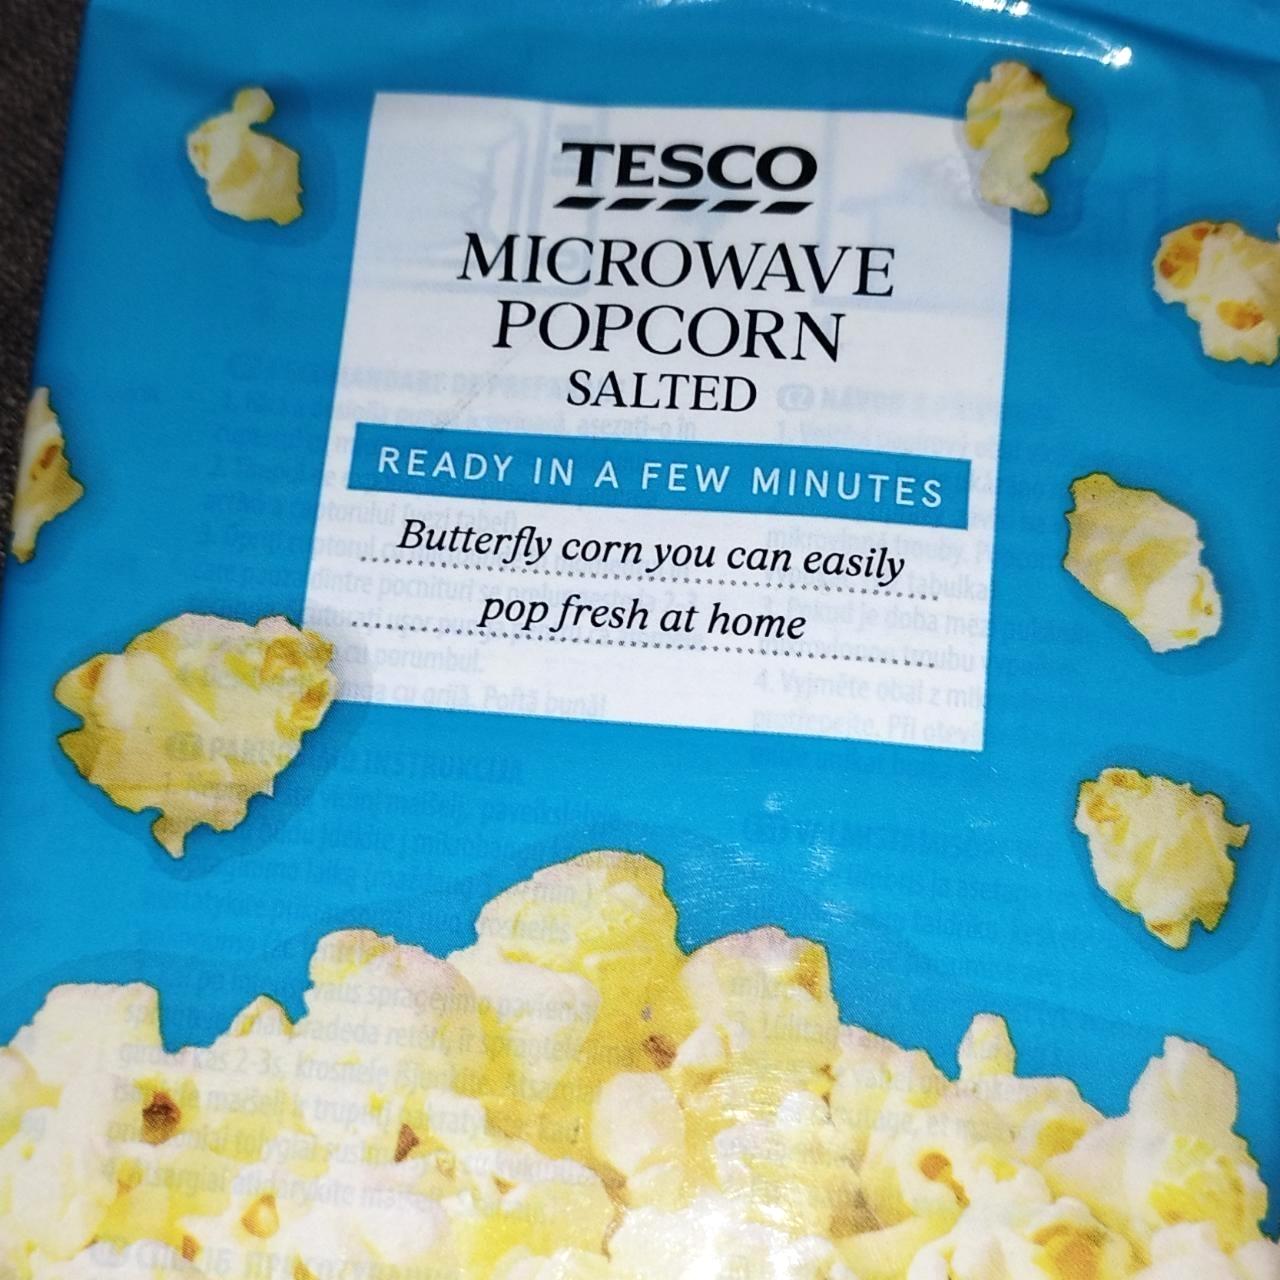 Képek - Microwave popcorn salted Tesco